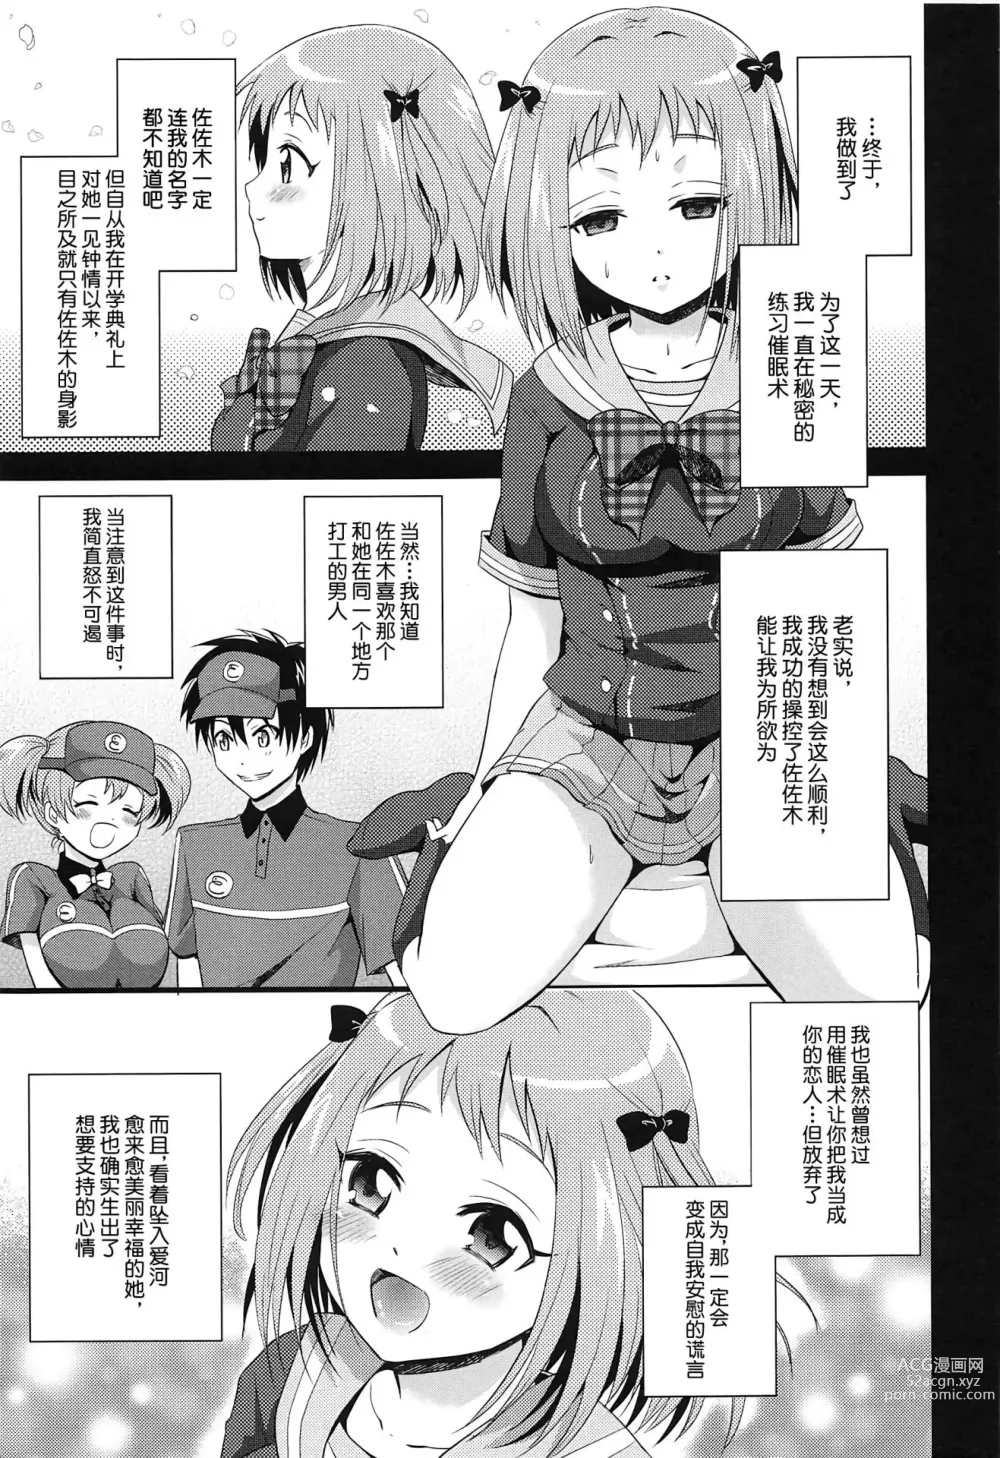 Page 2 of doujinshi 來和小千惠一起晚耍!